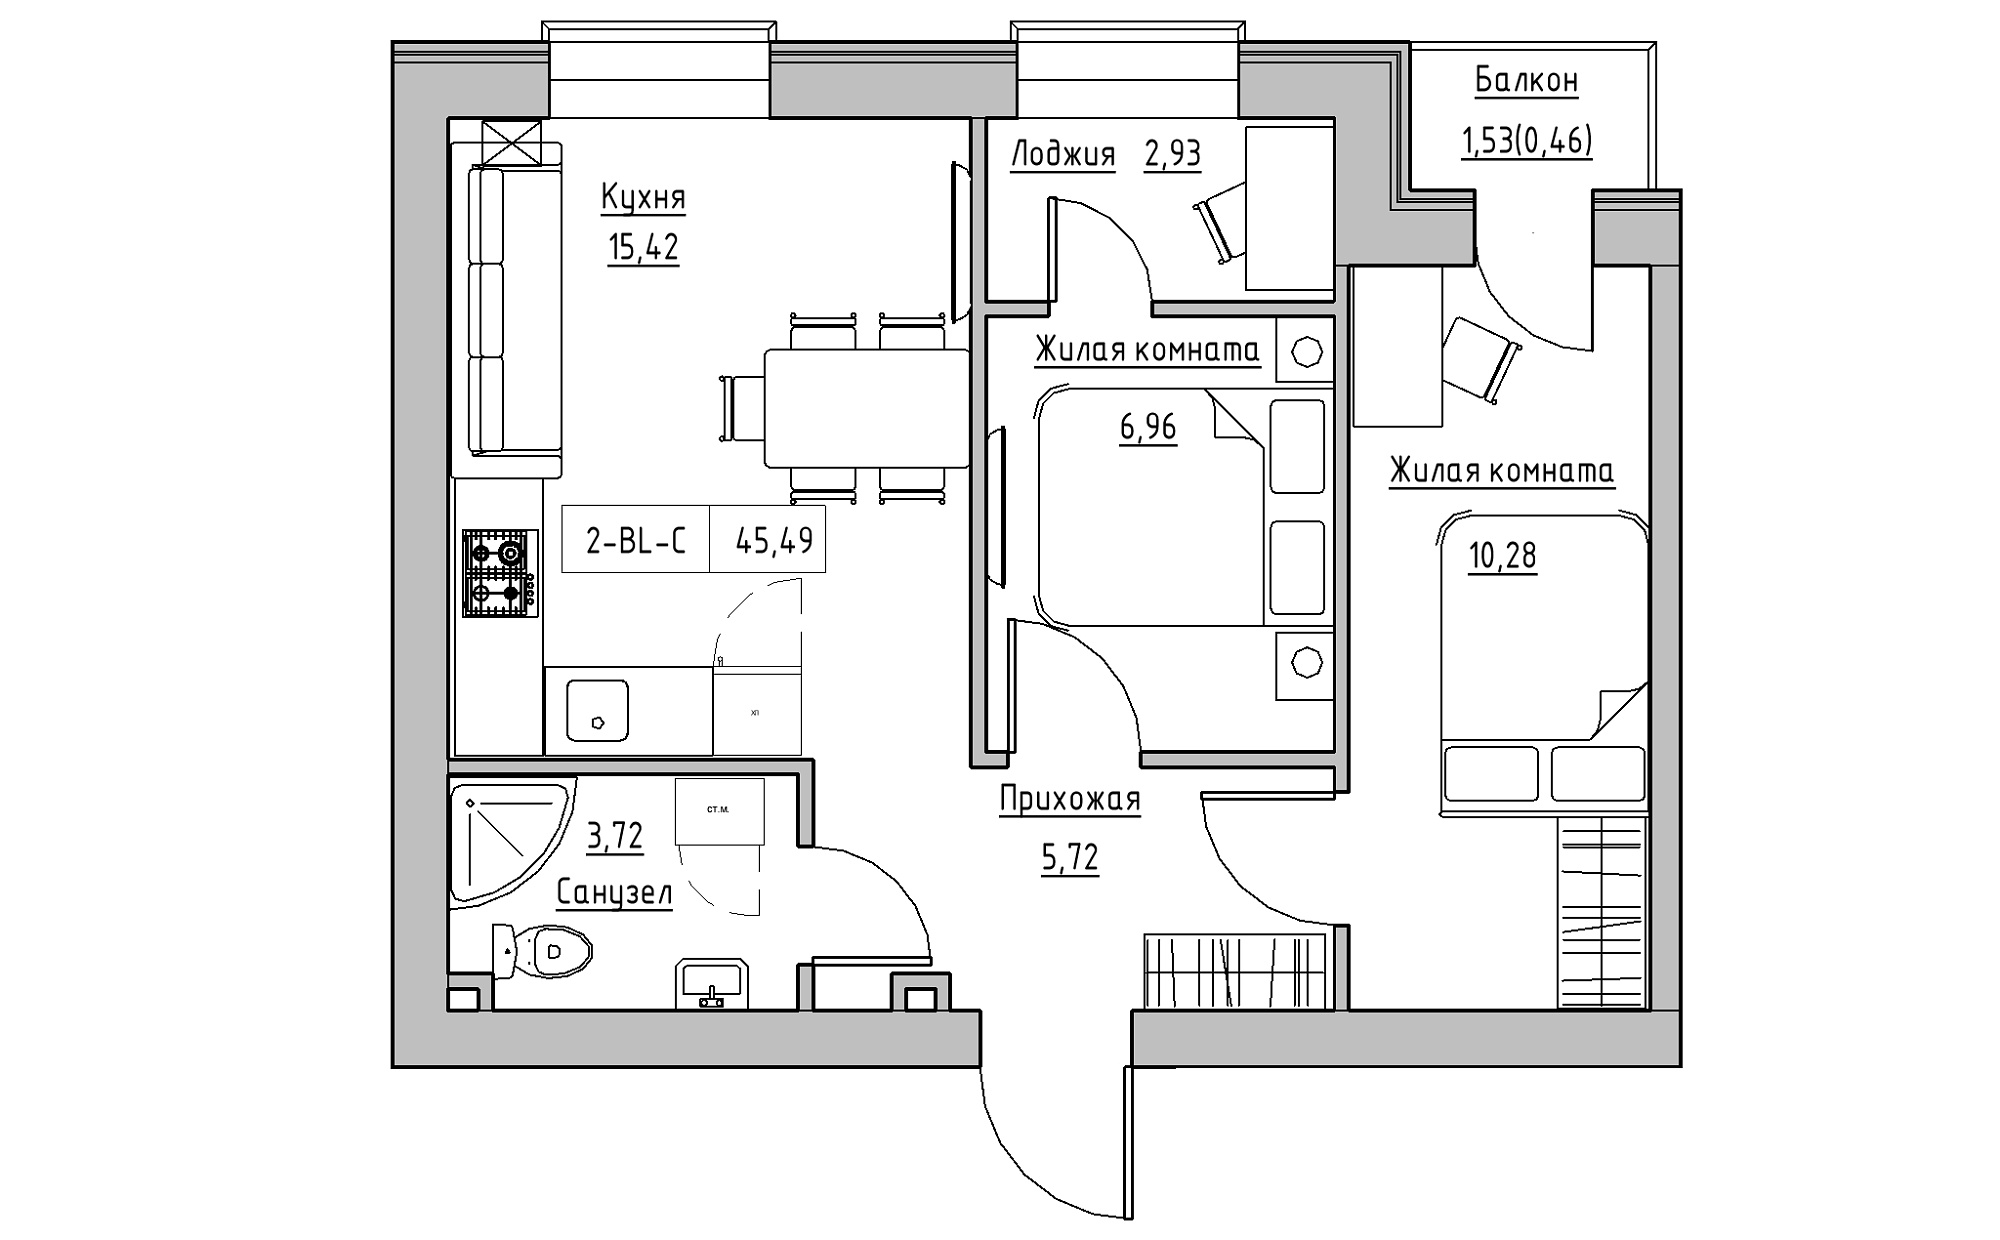 Planning 2-rm flats area 45.49m2, KS-022-02/0008.